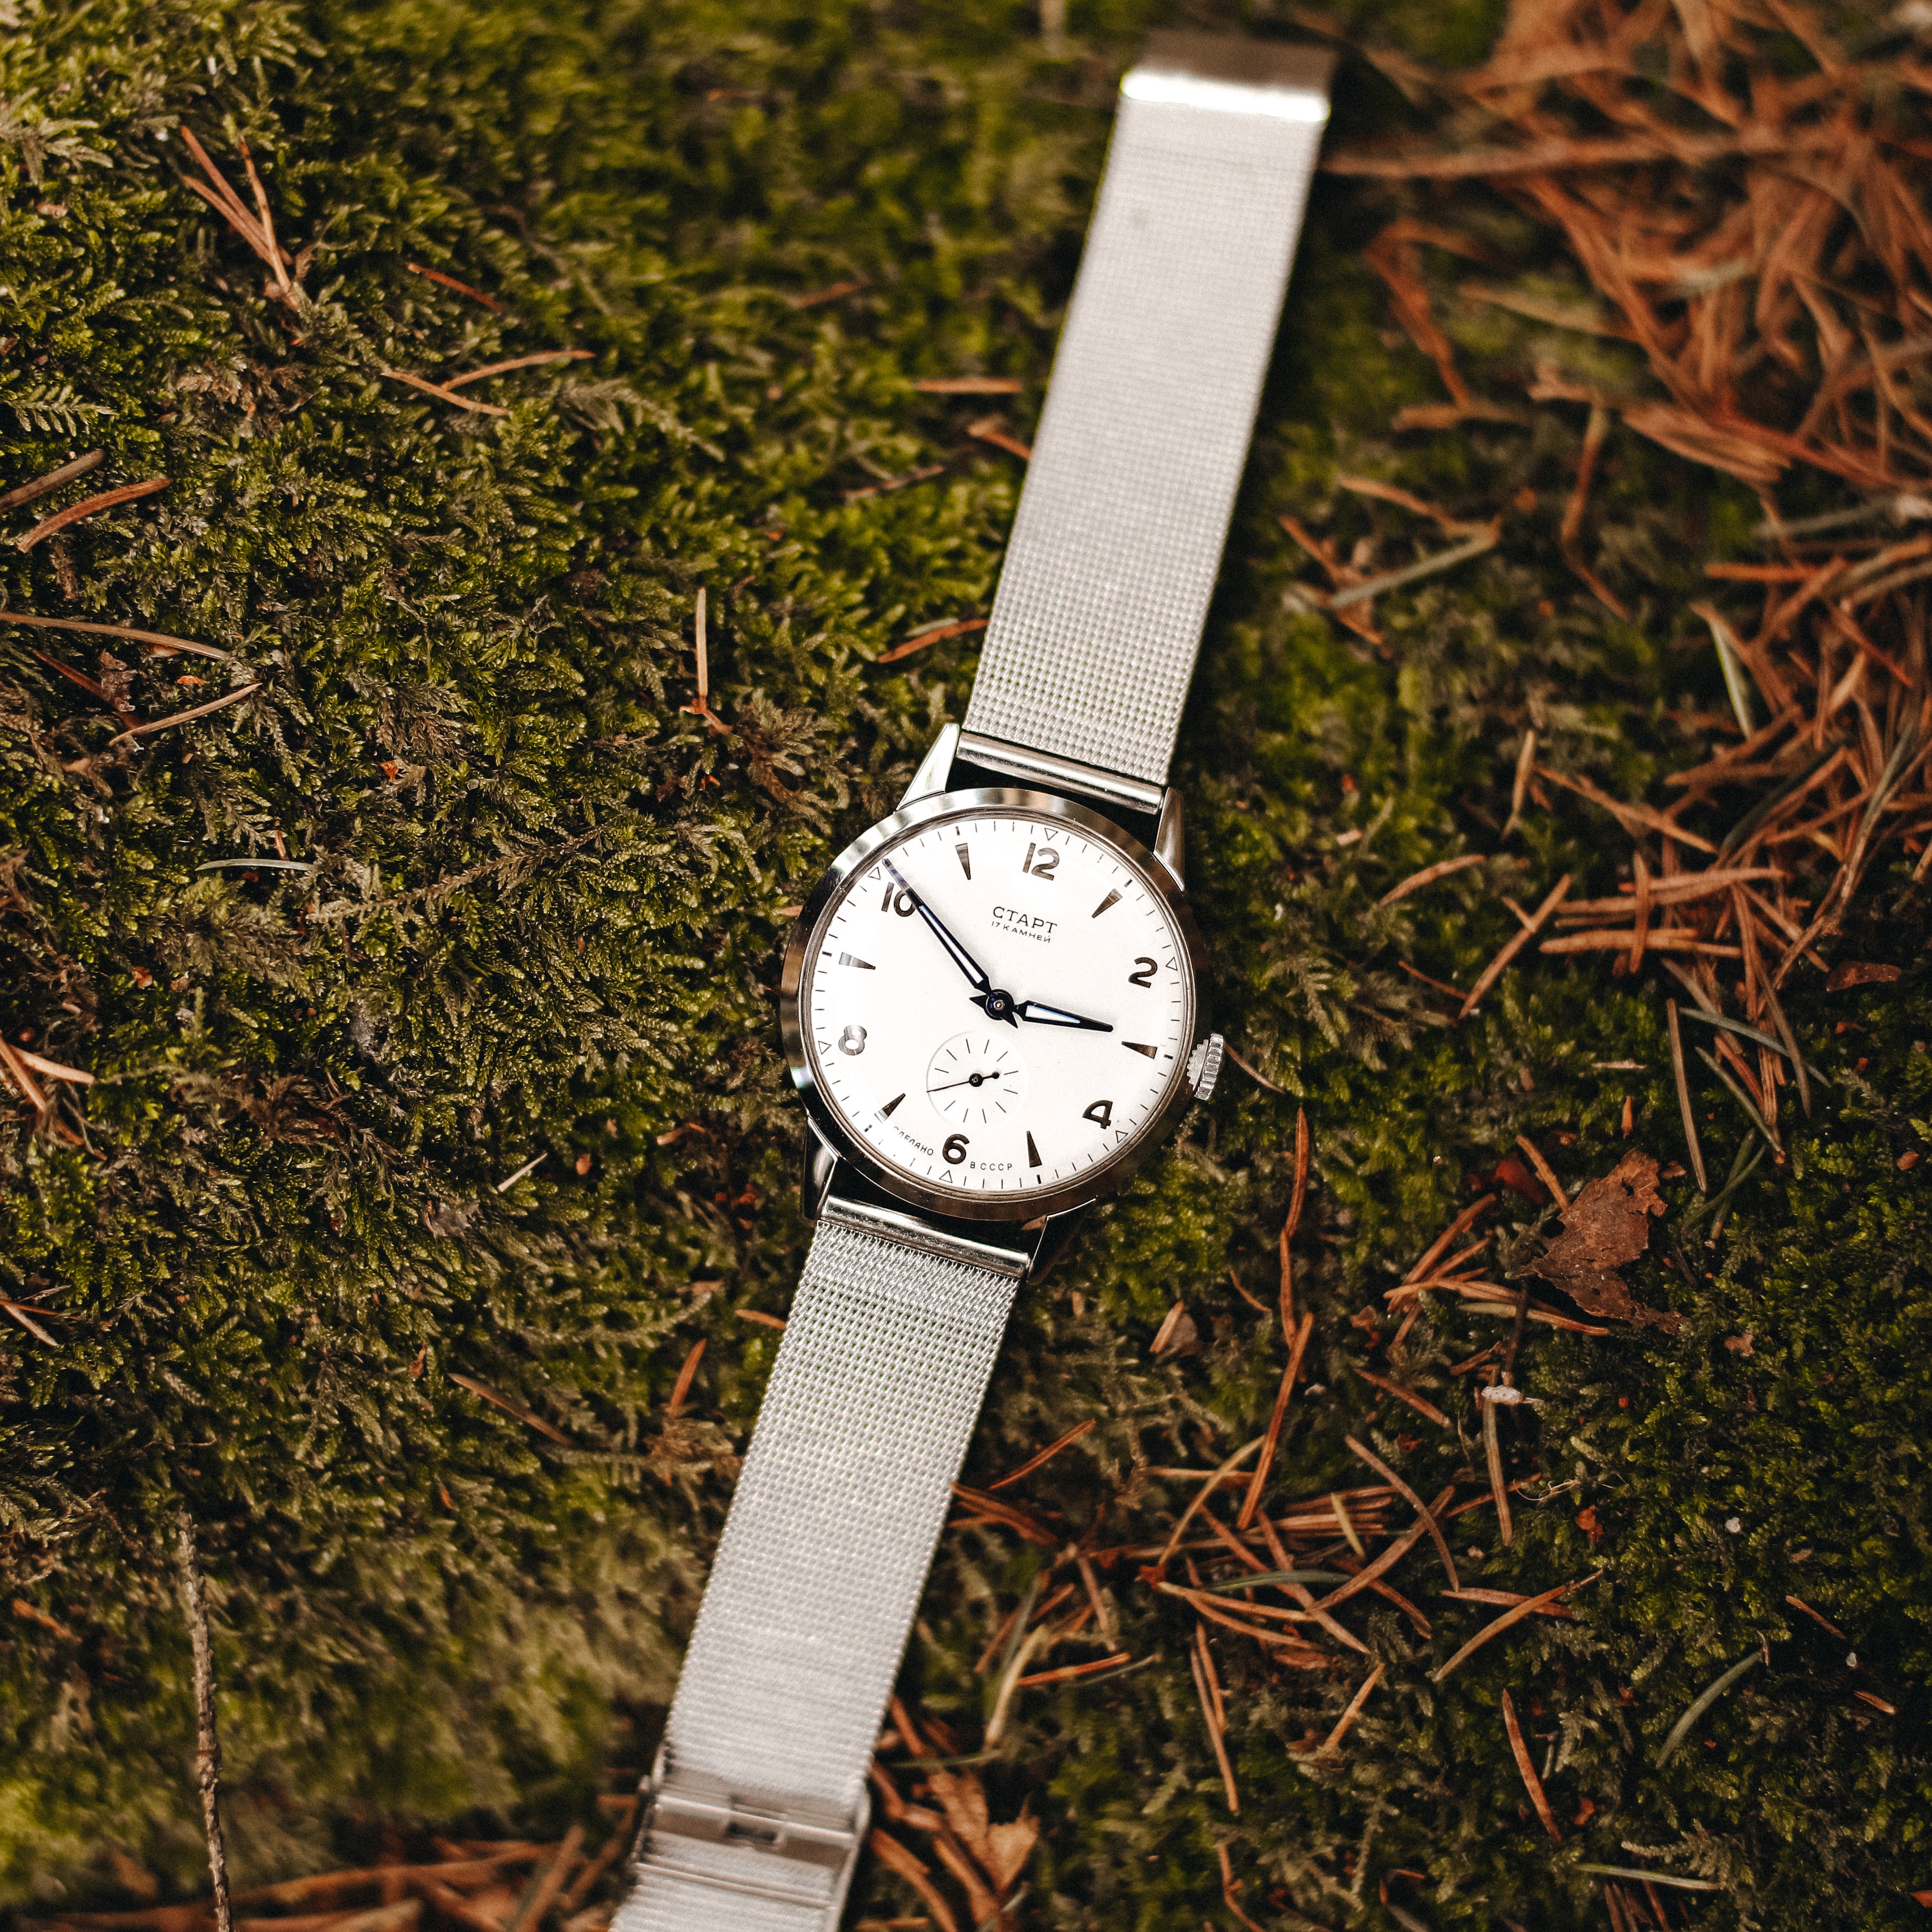 Vintage rare soviet wrist watch for men Start with stainless steel watch strap